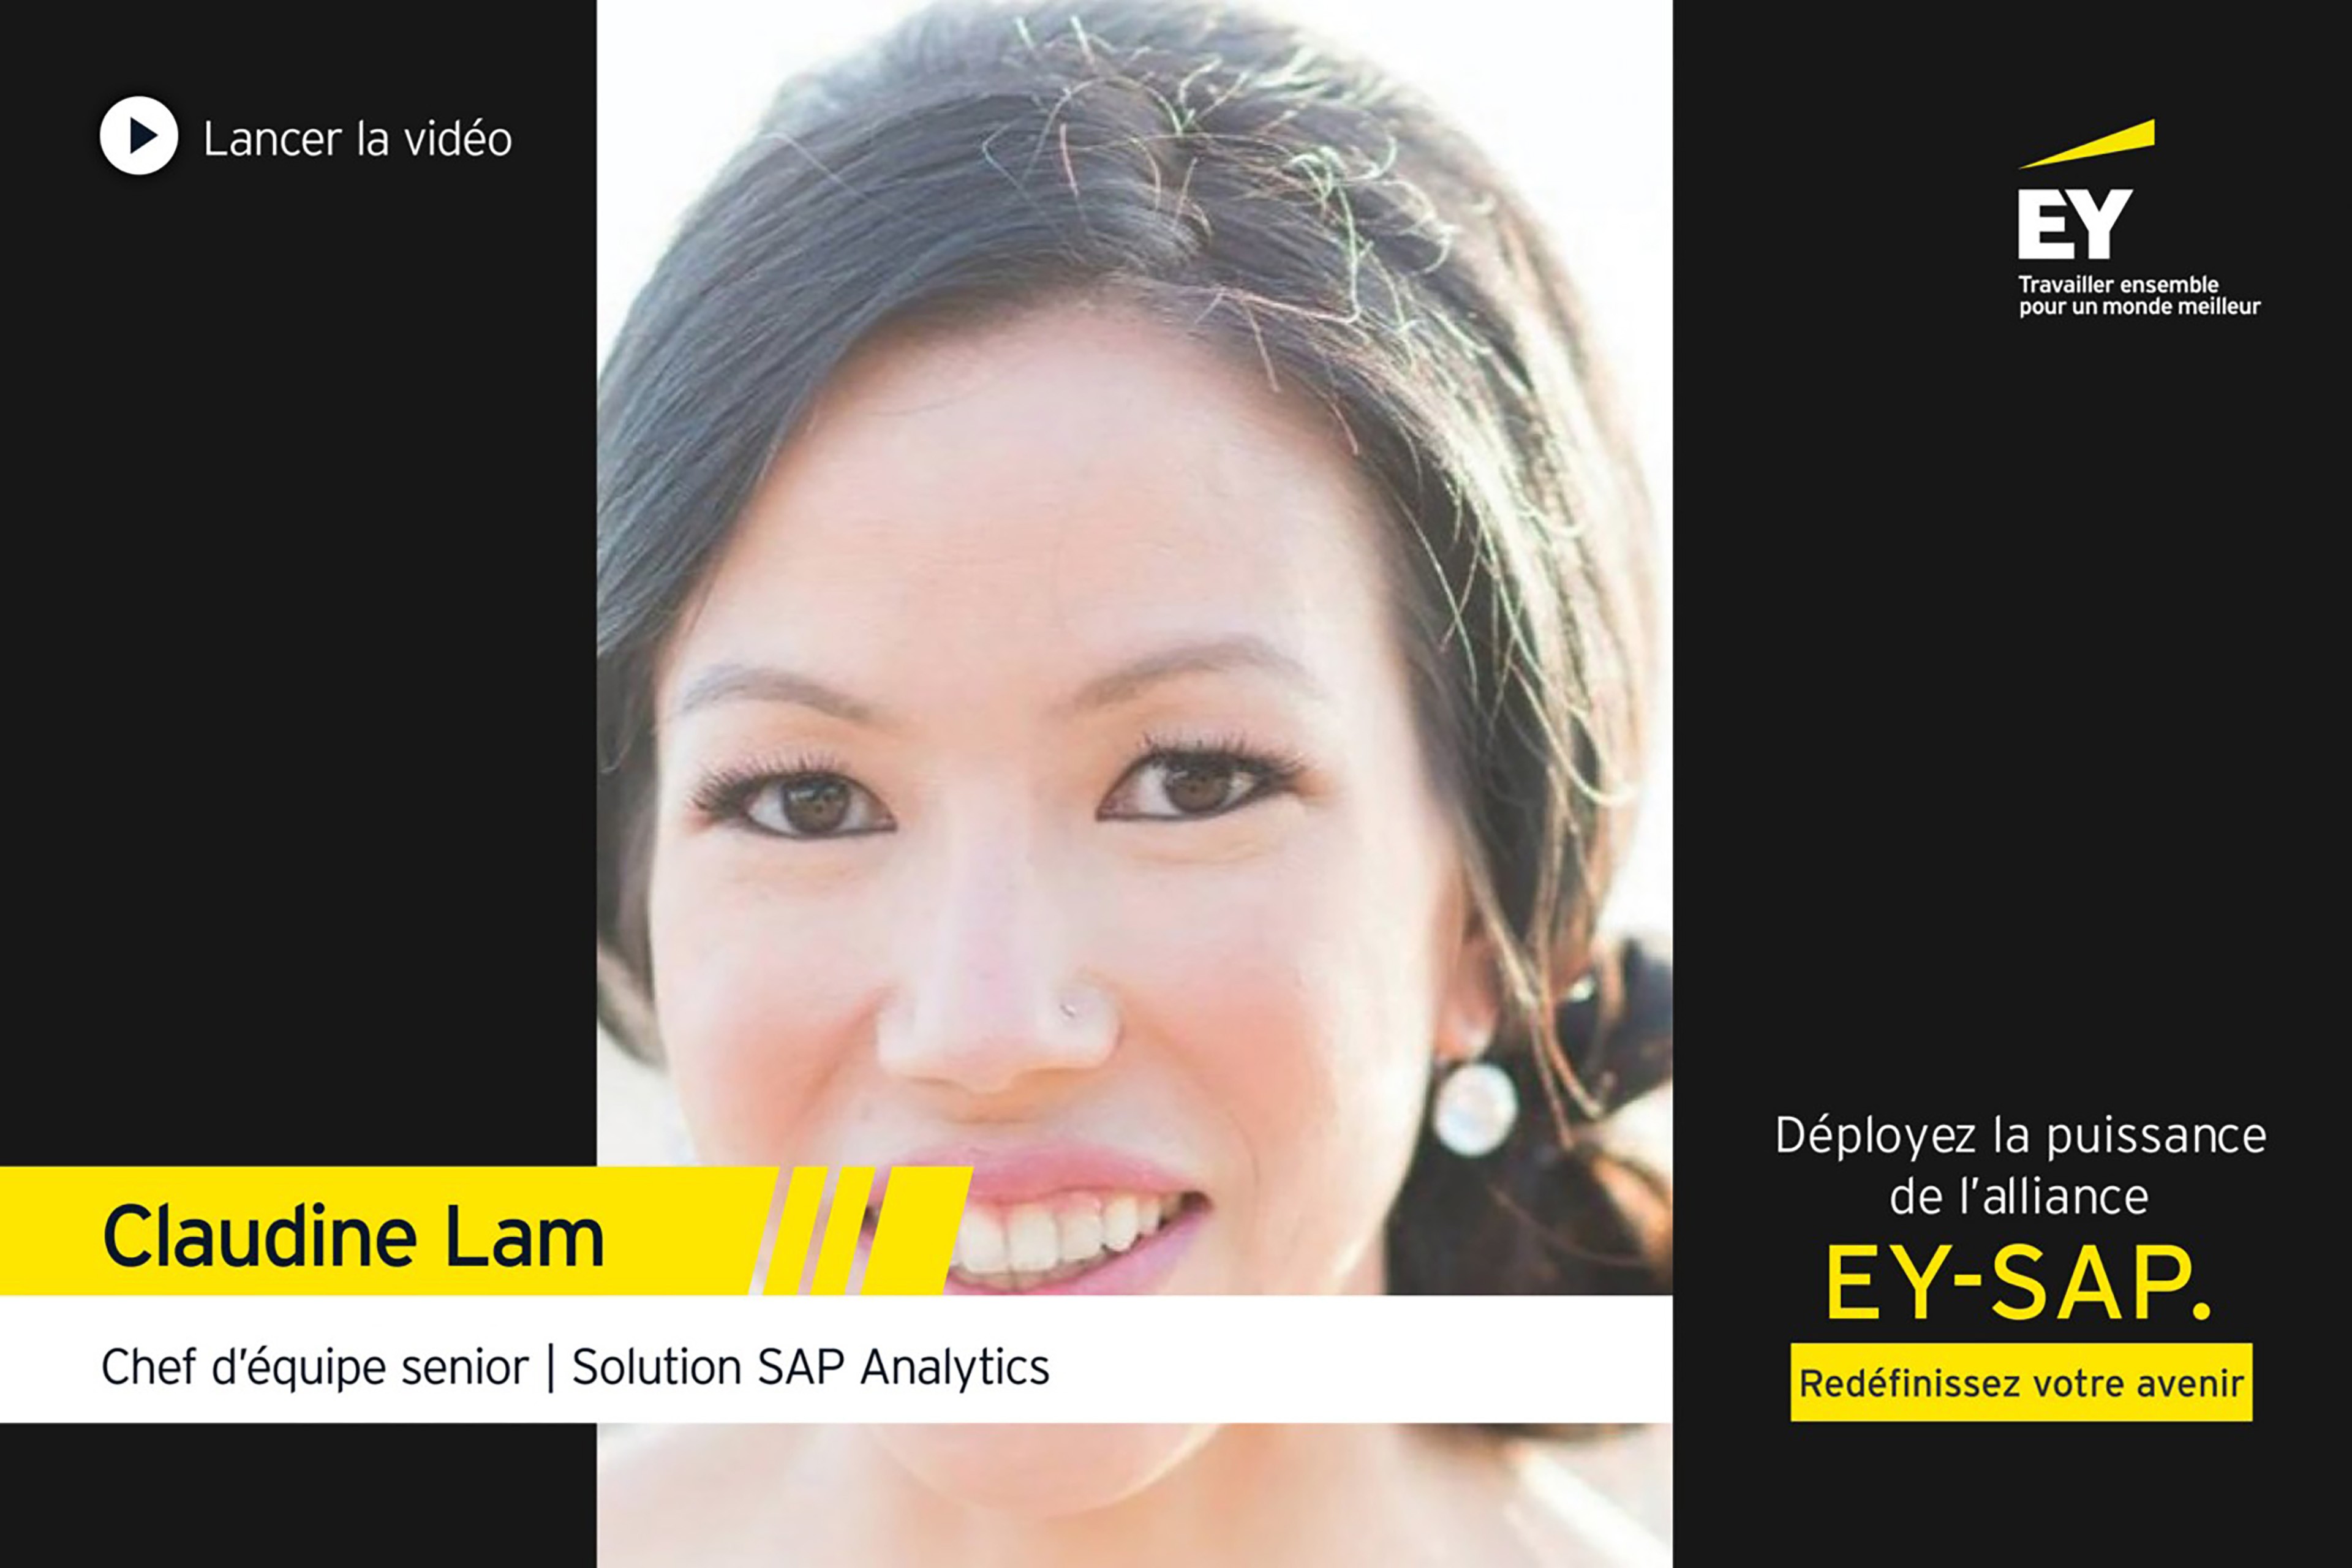 EY - Claudine Lam, Chef d’équipe senior, Solution SAP Analytics, EY Canada